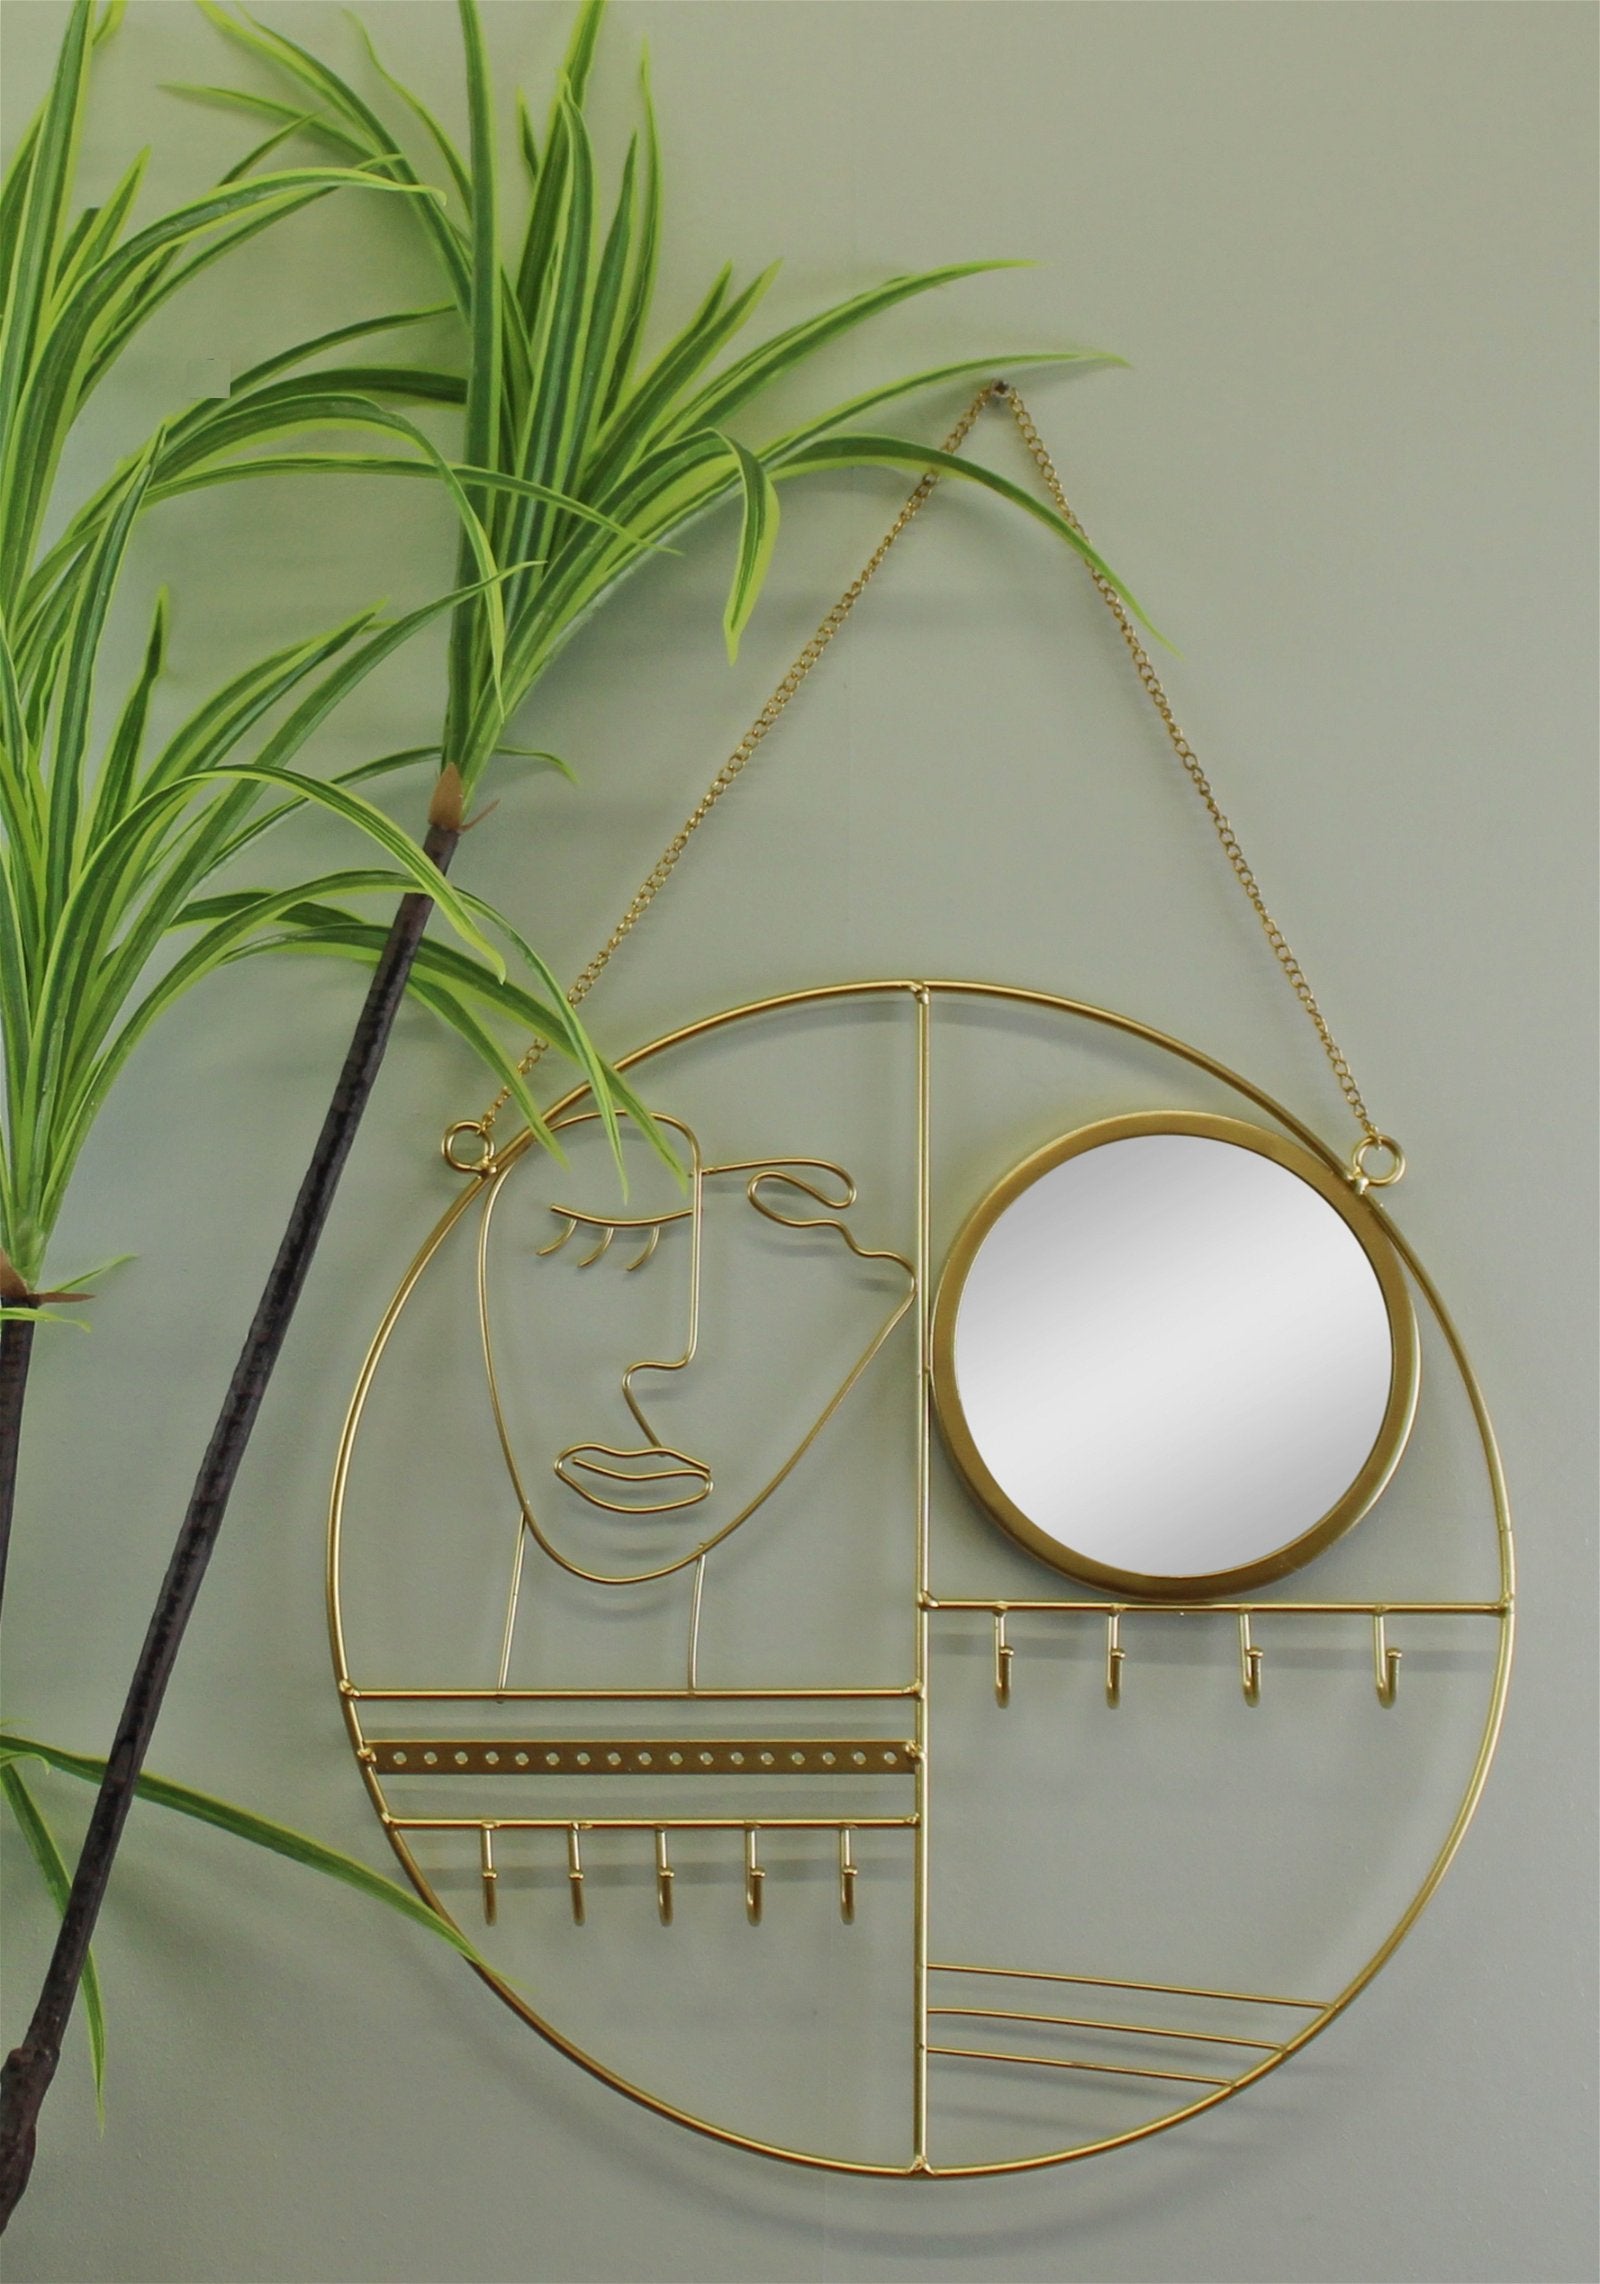 Gold Metal Jewellery Hanger With Mirror.